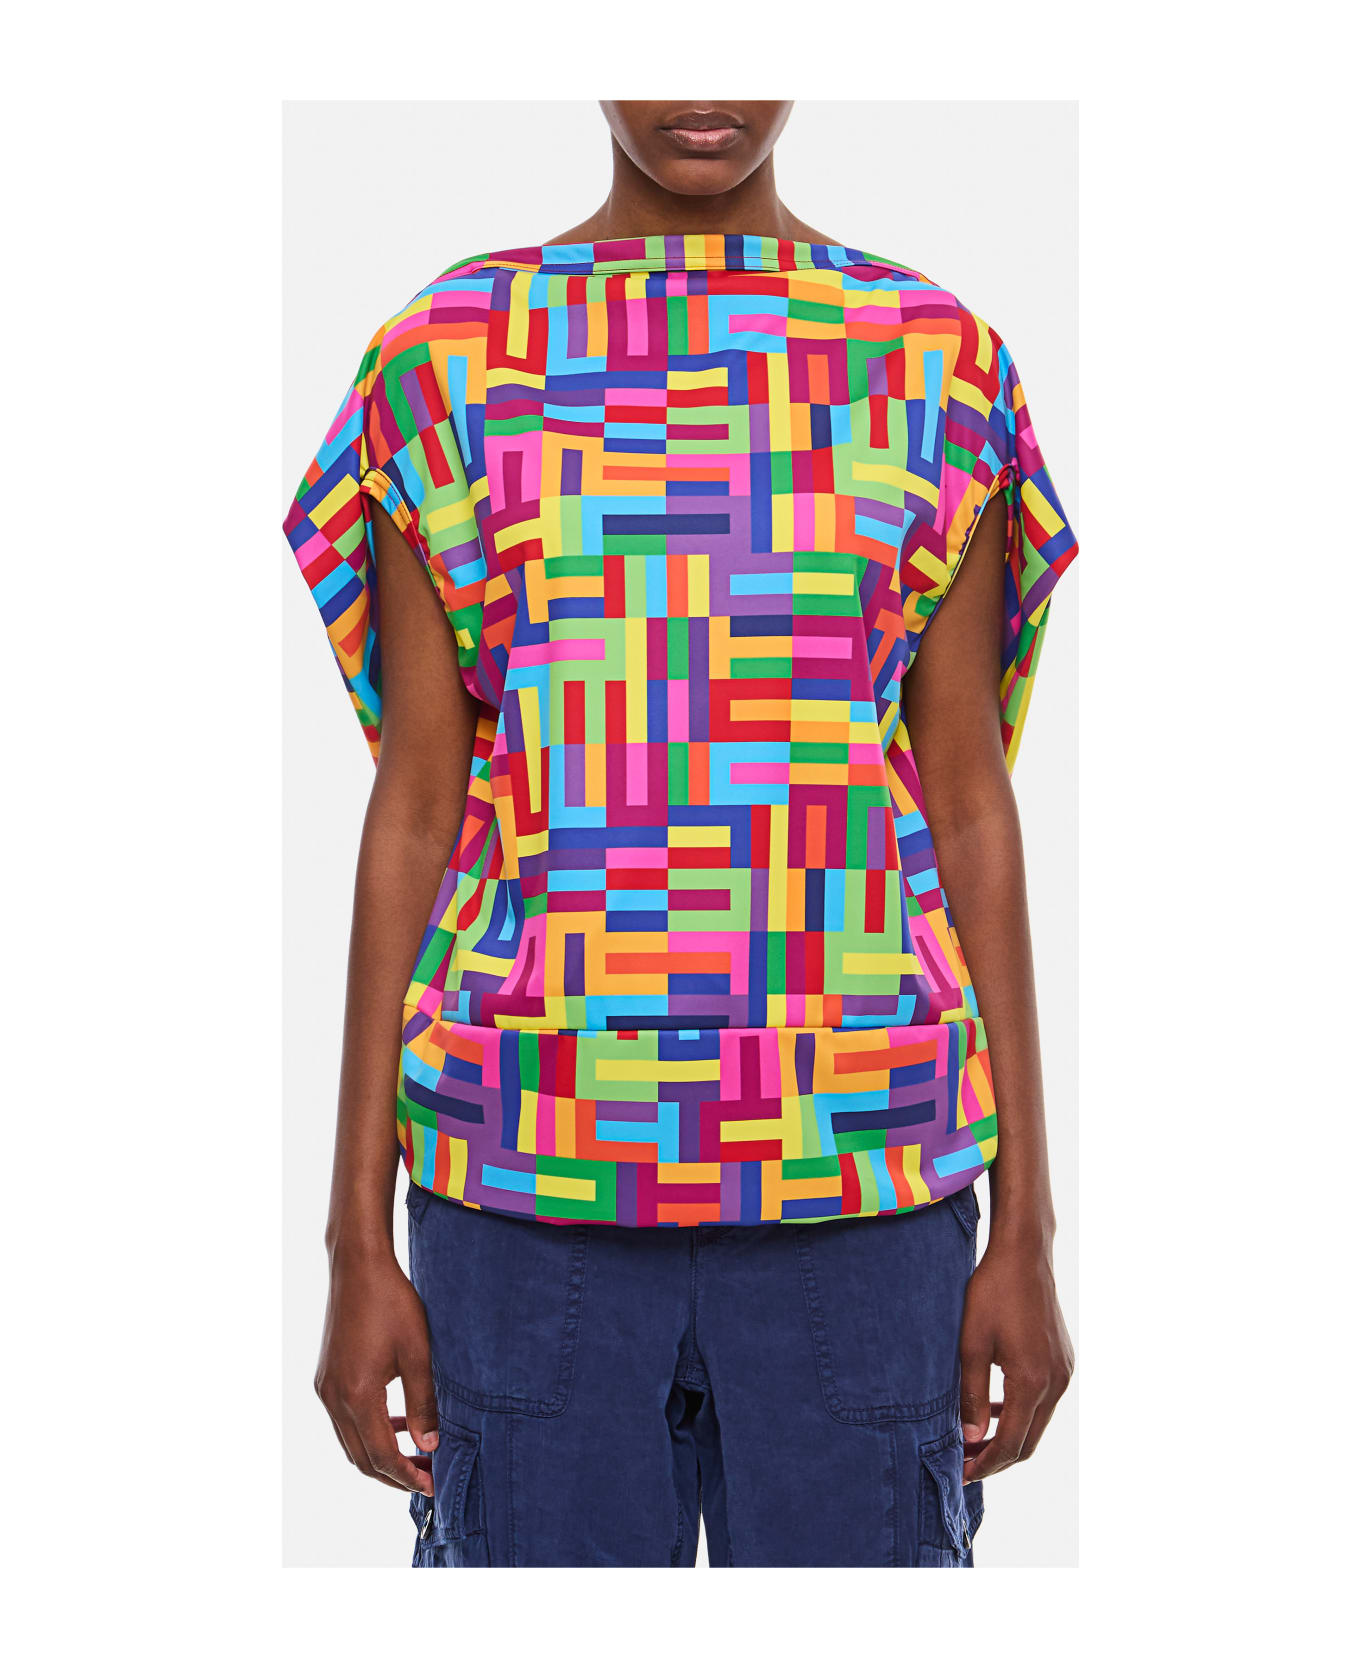 Karpos Men s clothing Jackets Geometric Pattern Top - MultiColour